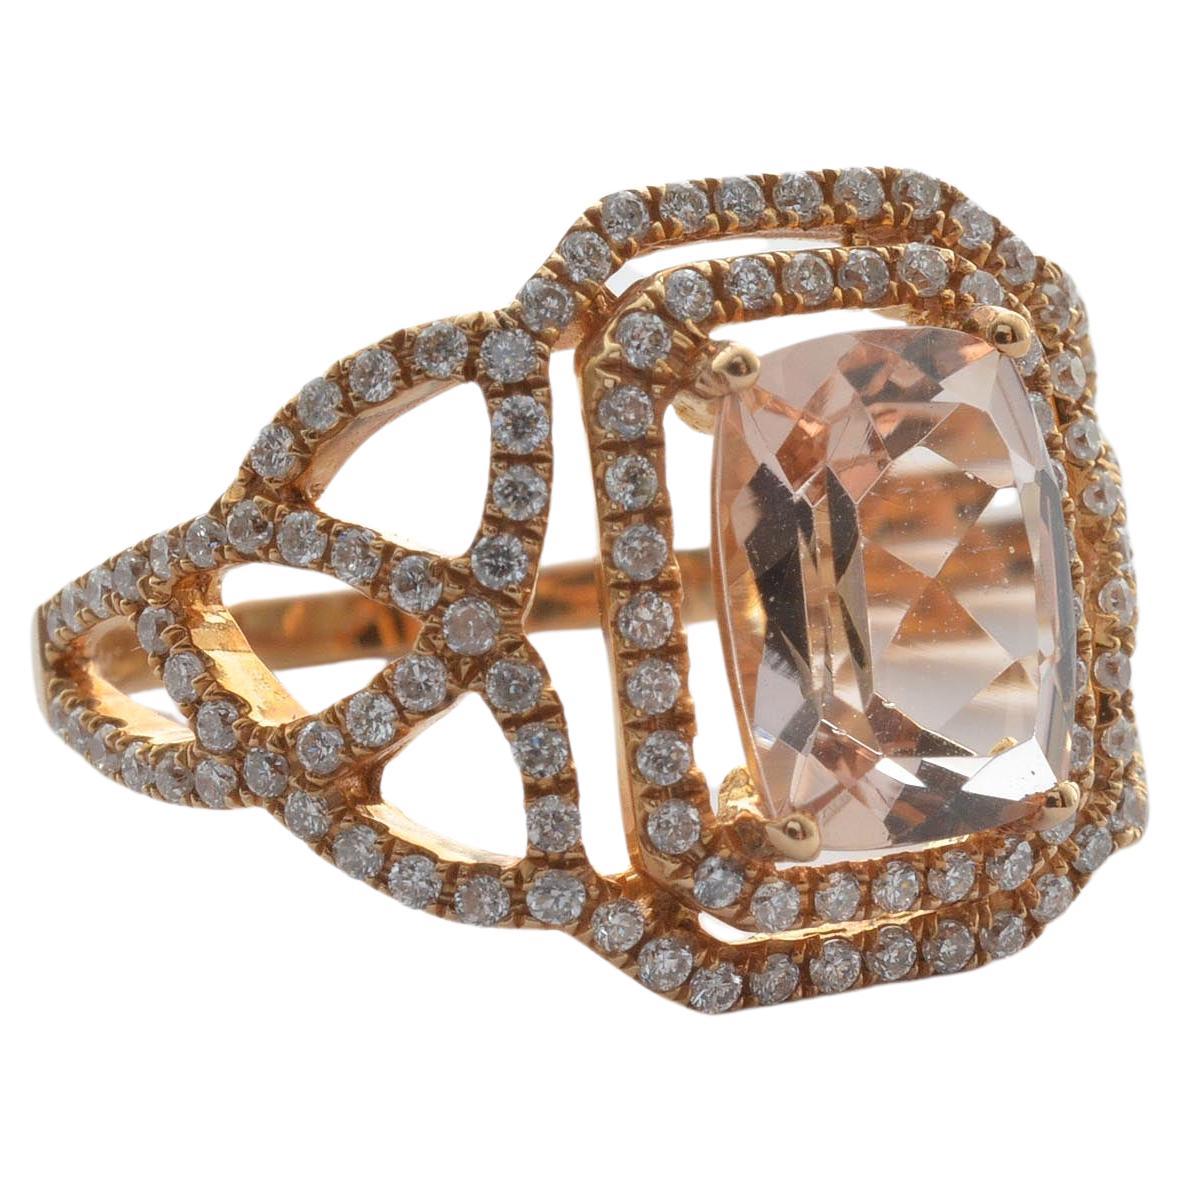 Bague en or rose 18 carats avec morganite et diamants de 1,99 carat.